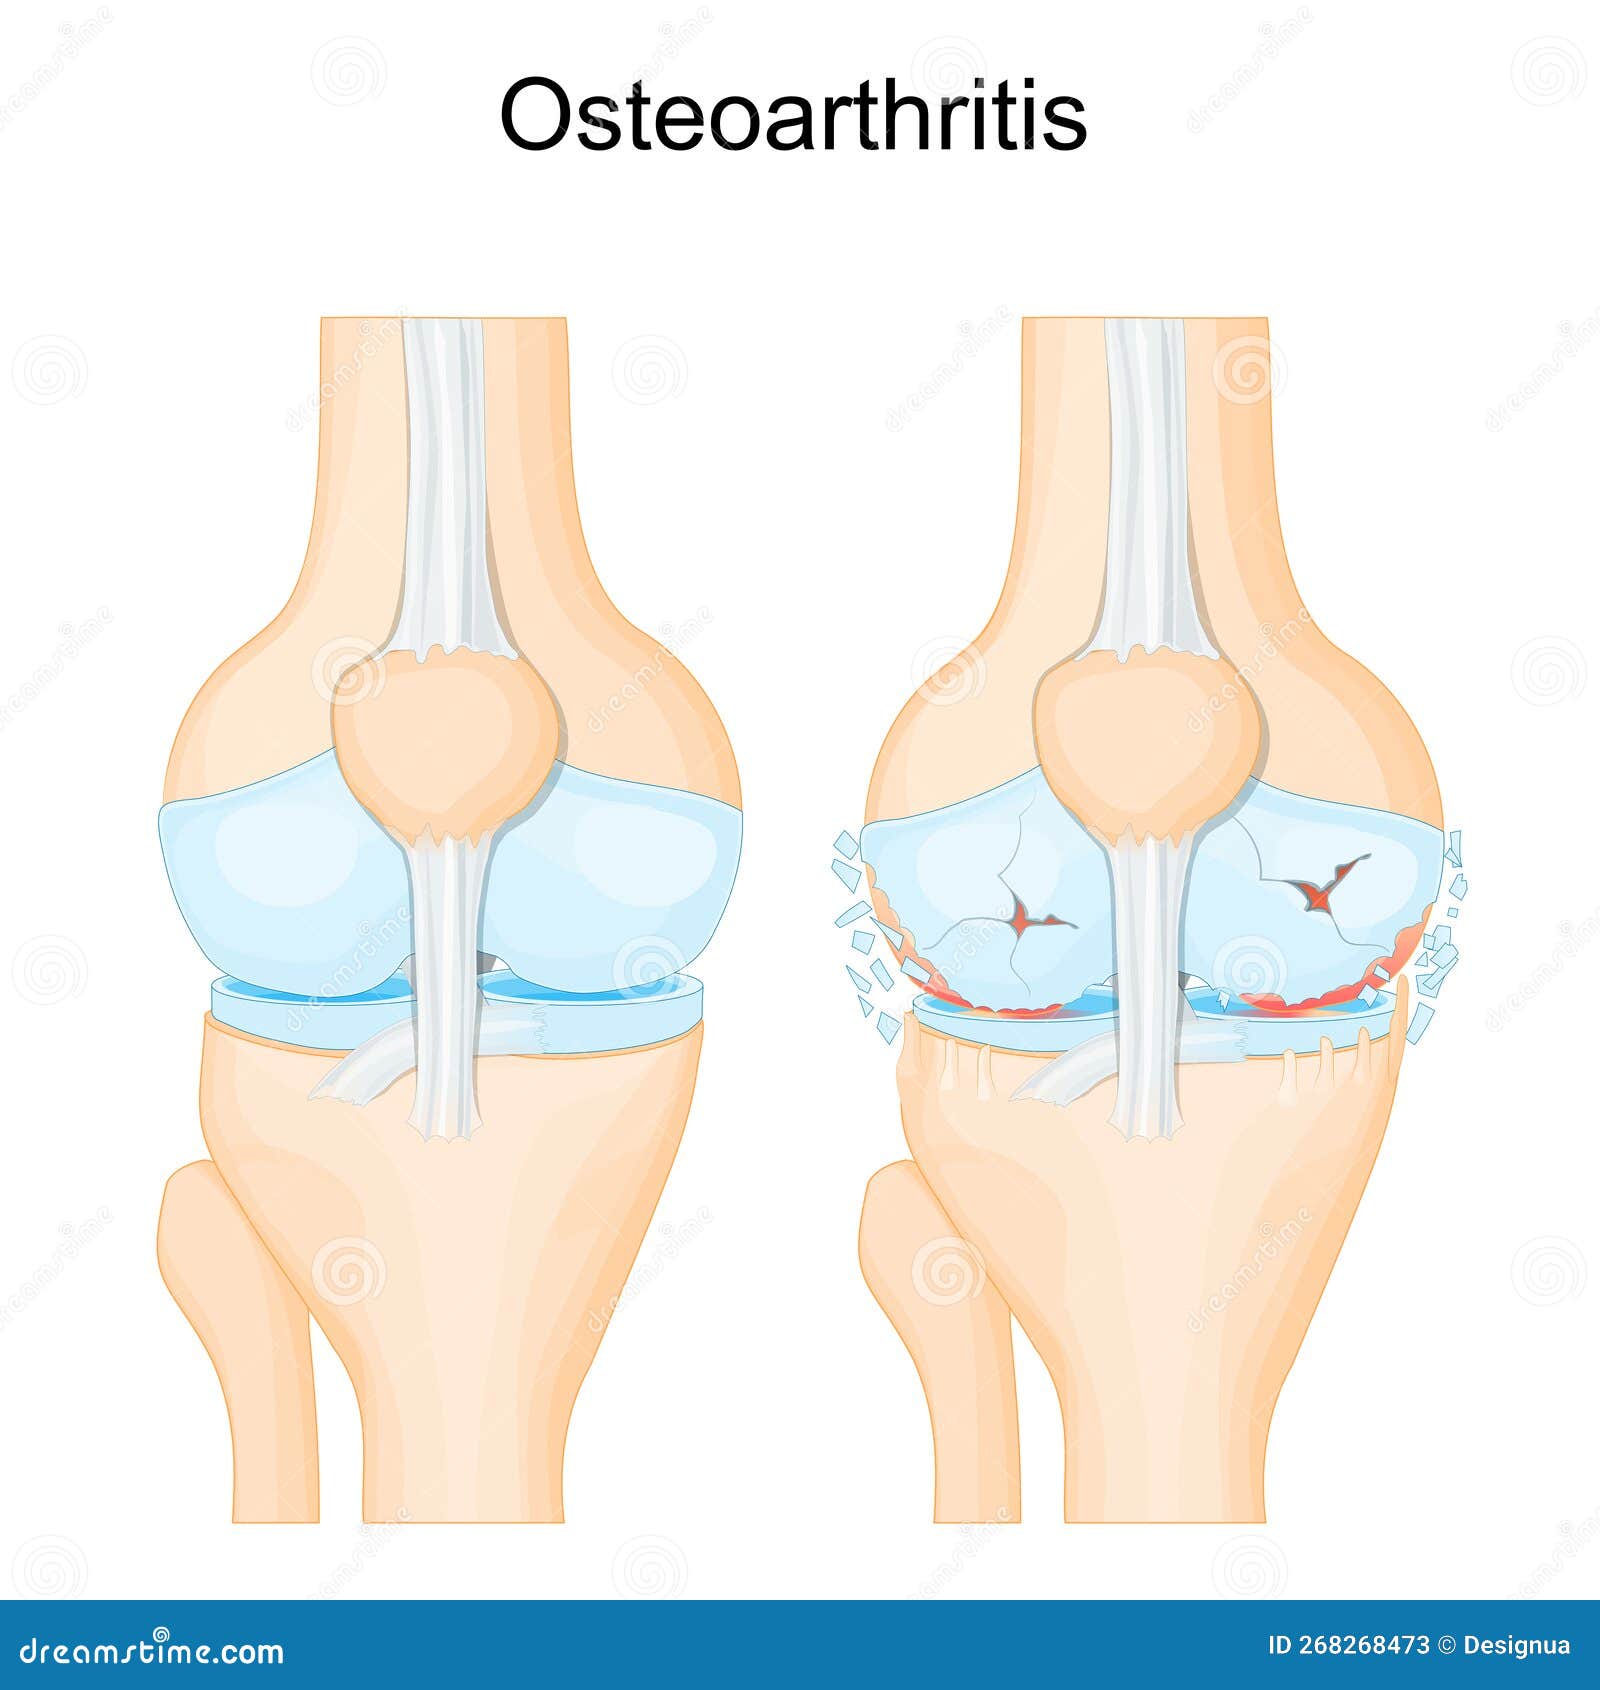 knee osteoarthritis. degenerative joint disease